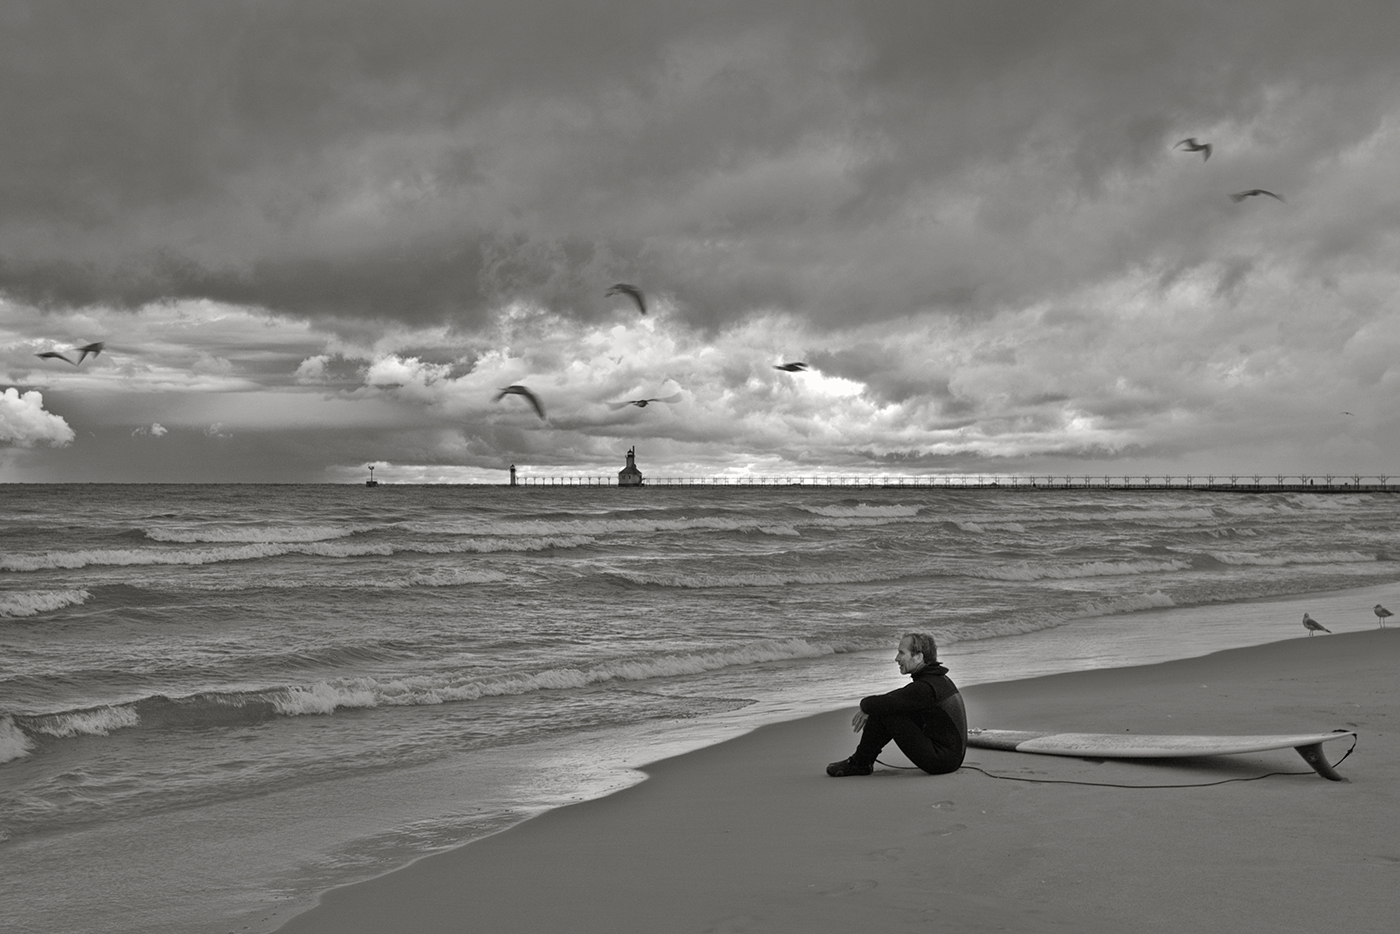 Lake Michigan Surfer by Lance Lewin